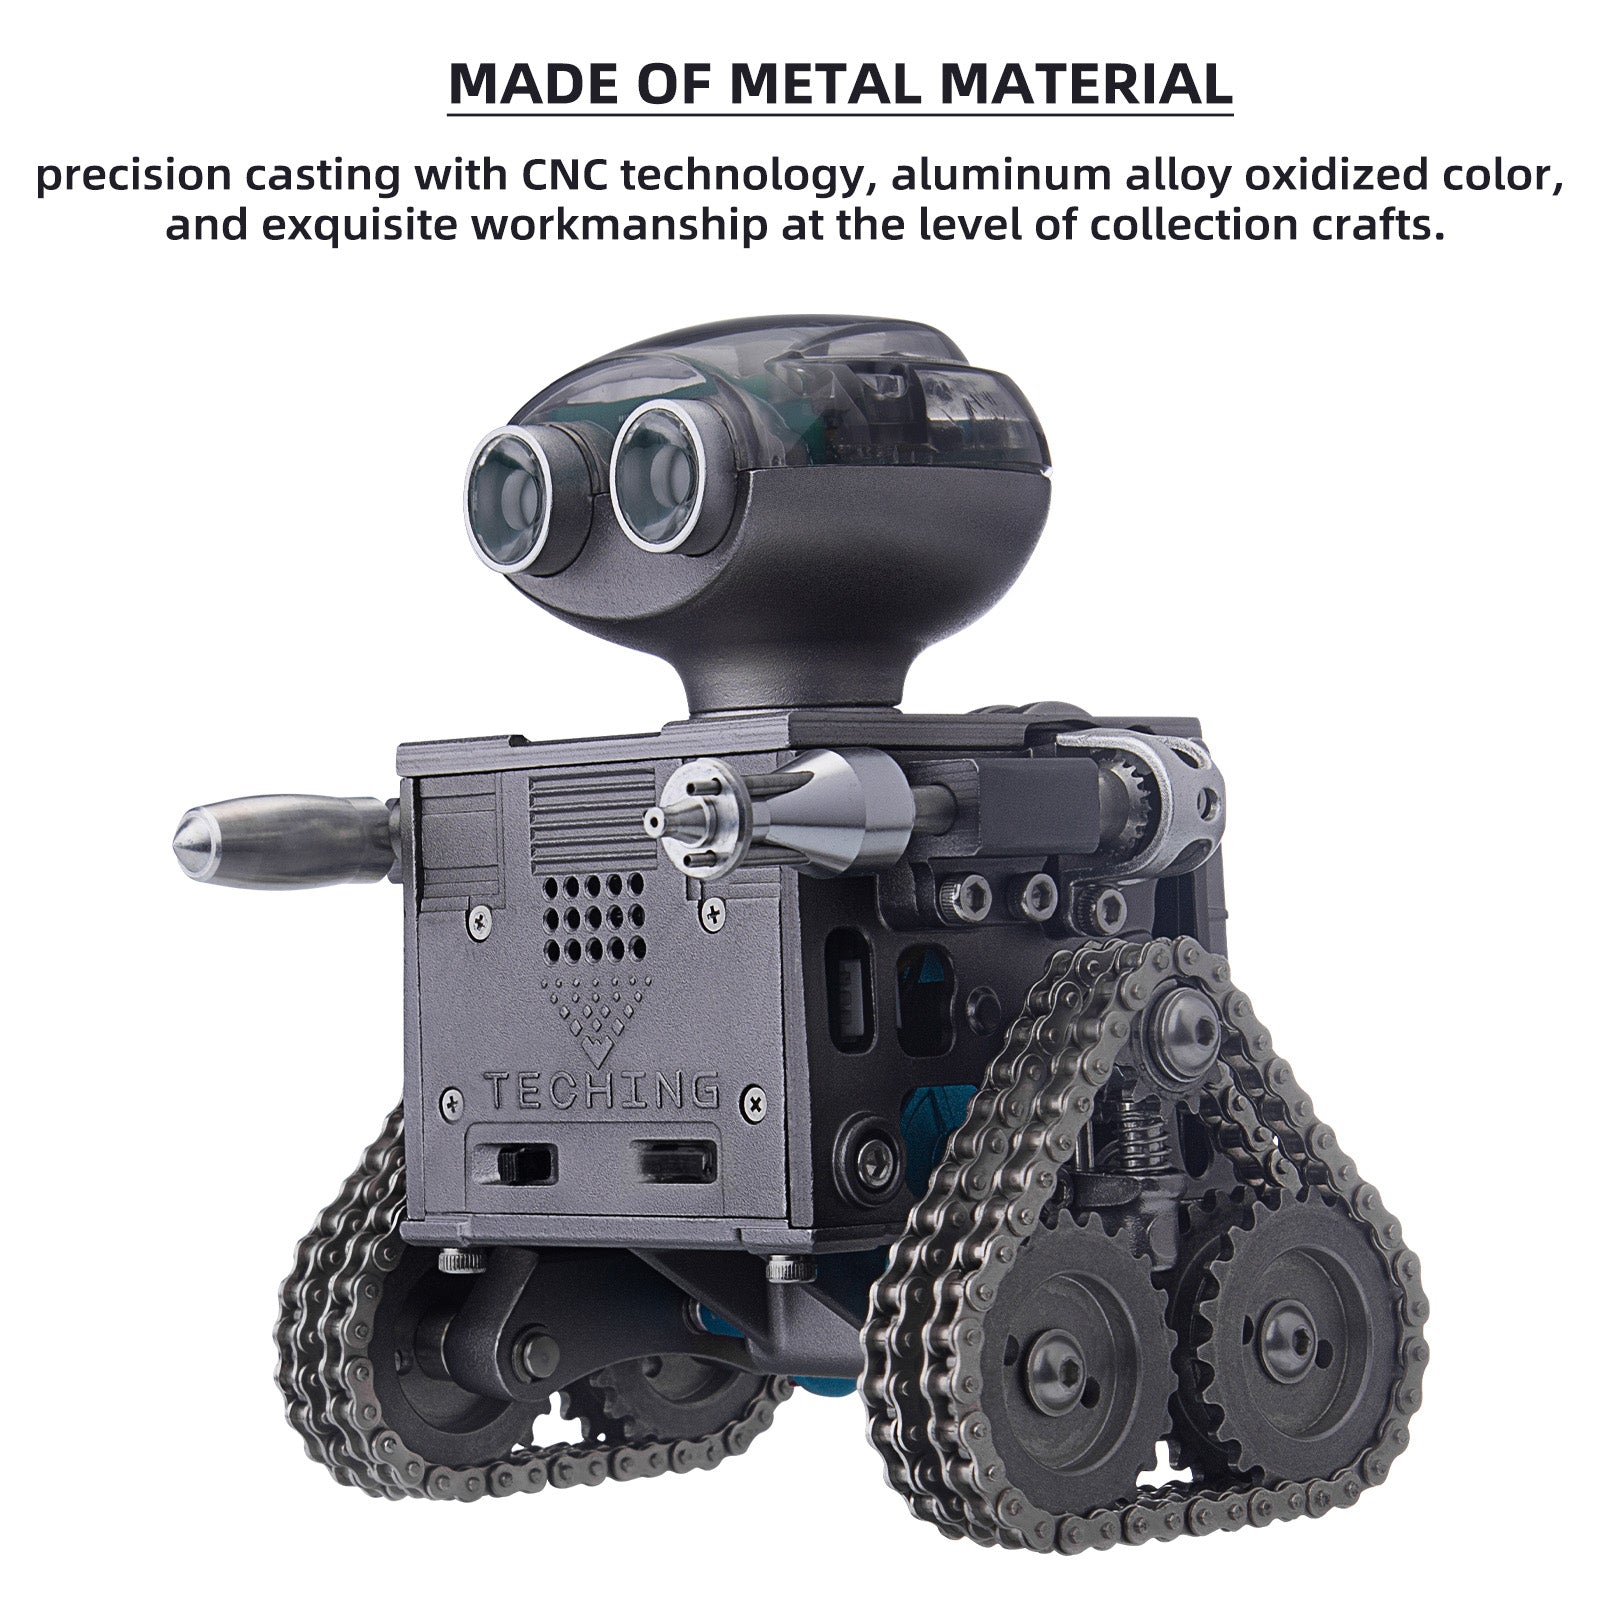 DIY Wall-E Build at Home Remote Control Robot